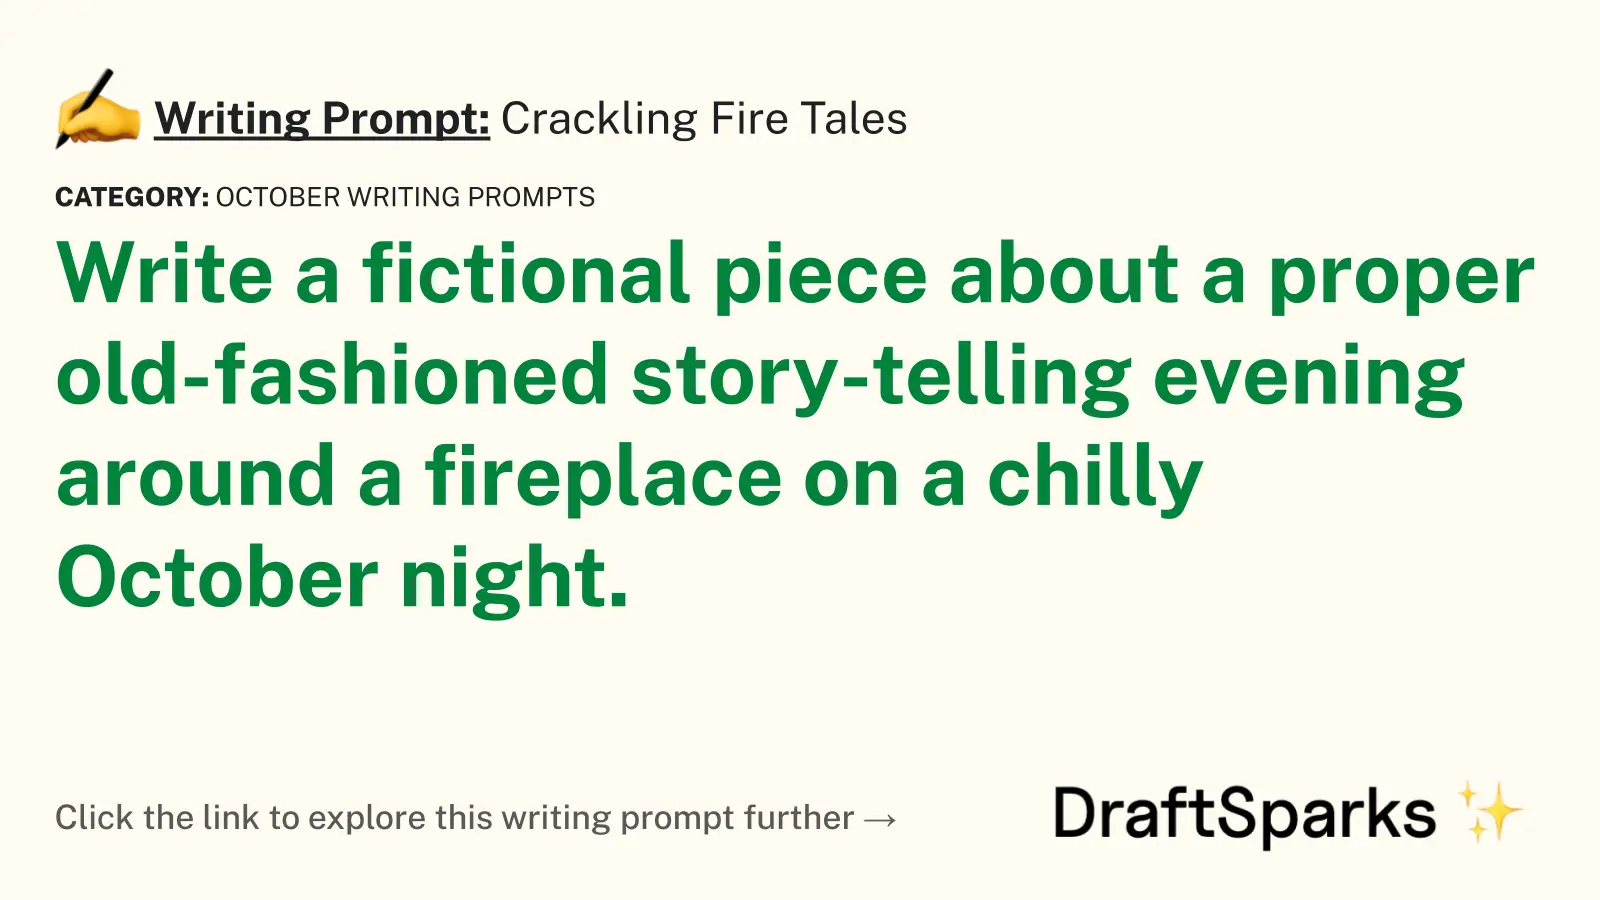 Crackling Fire Tales